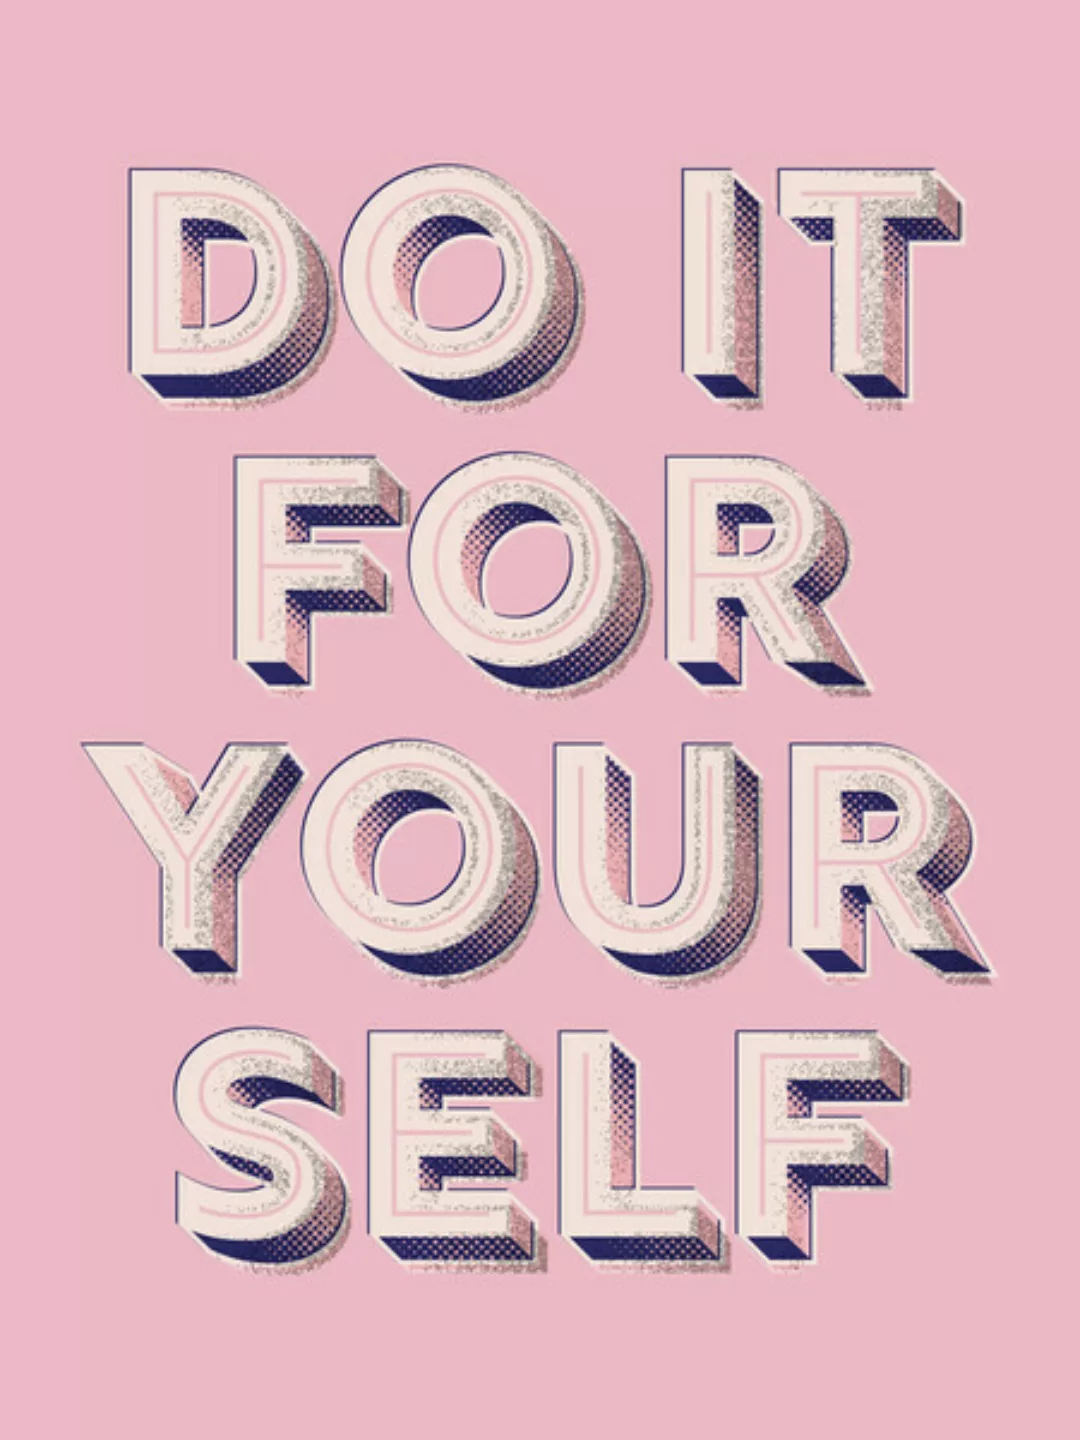 Poster / Leinwandbild - Do It For Yourself günstig online kaufen